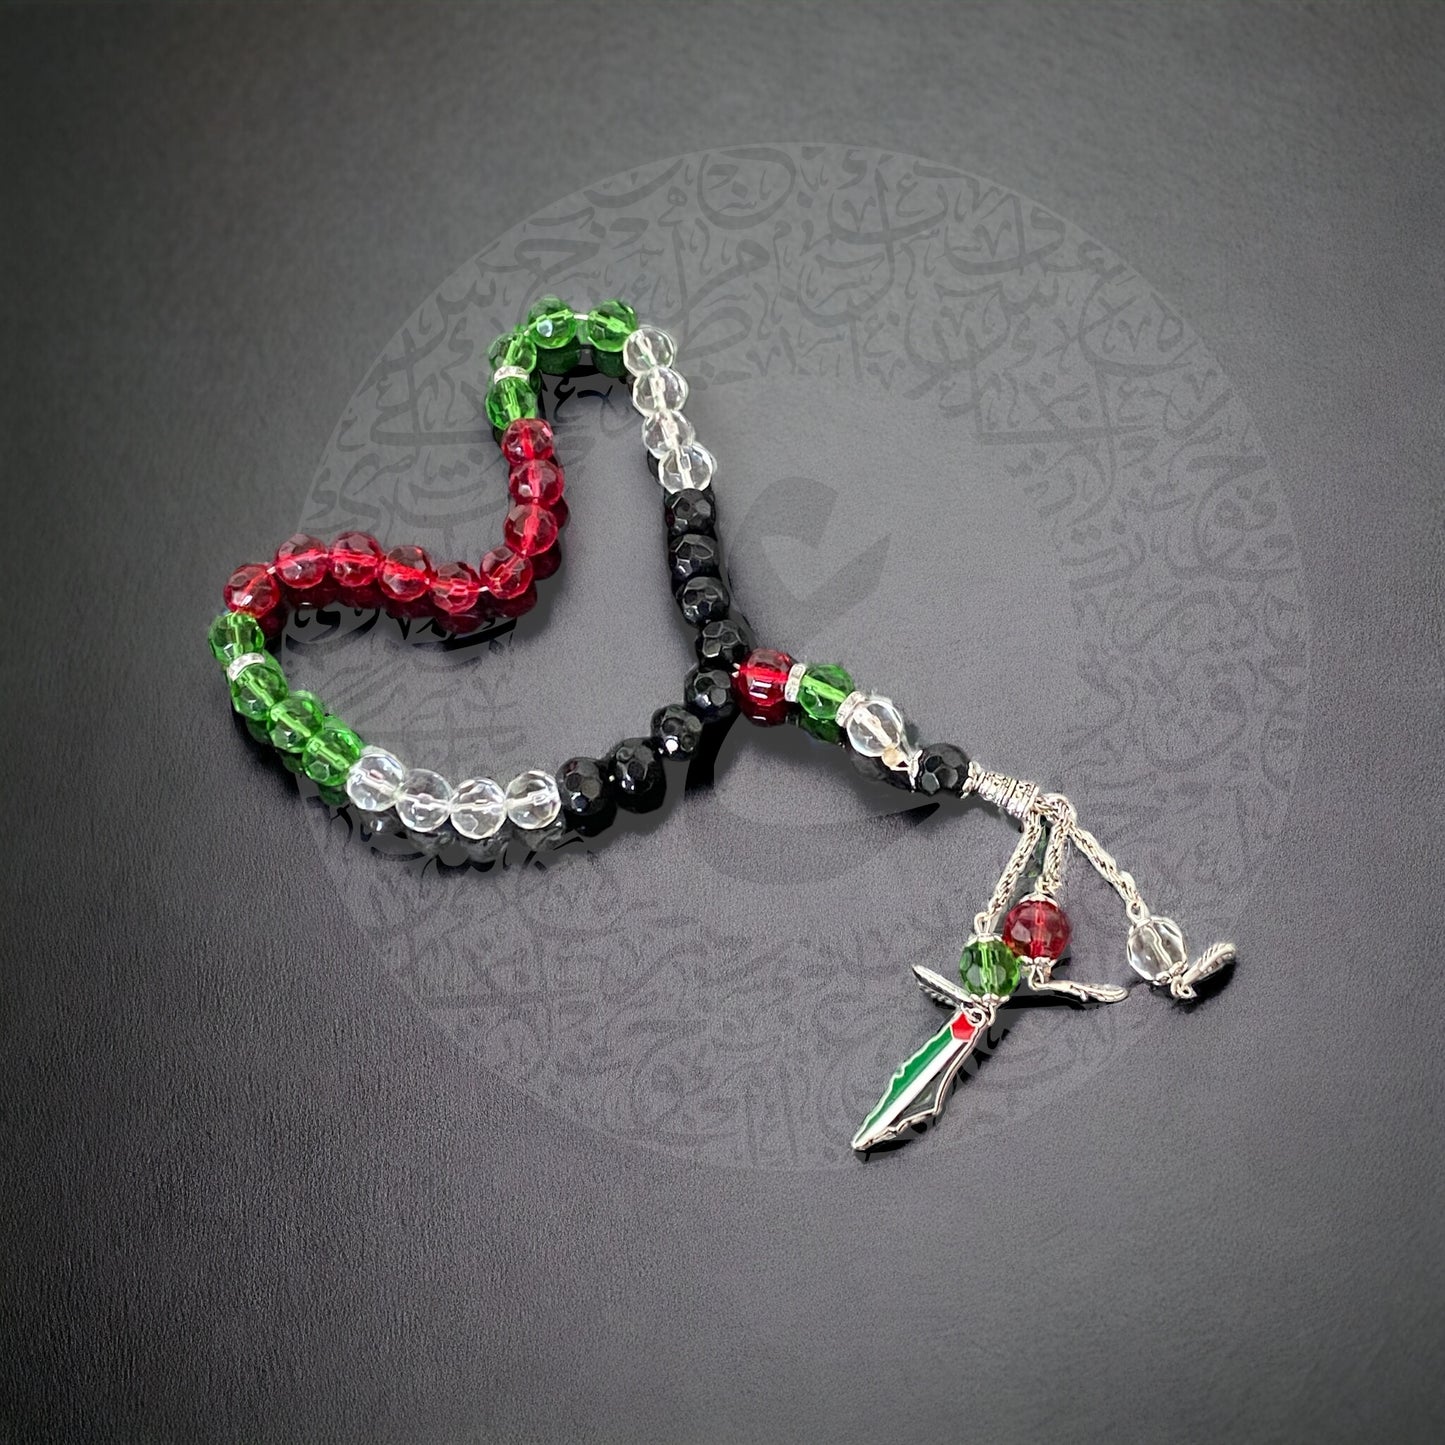 Palestine Essence" – Exquisite Palestinian-Themed Crystal Prayer Beads